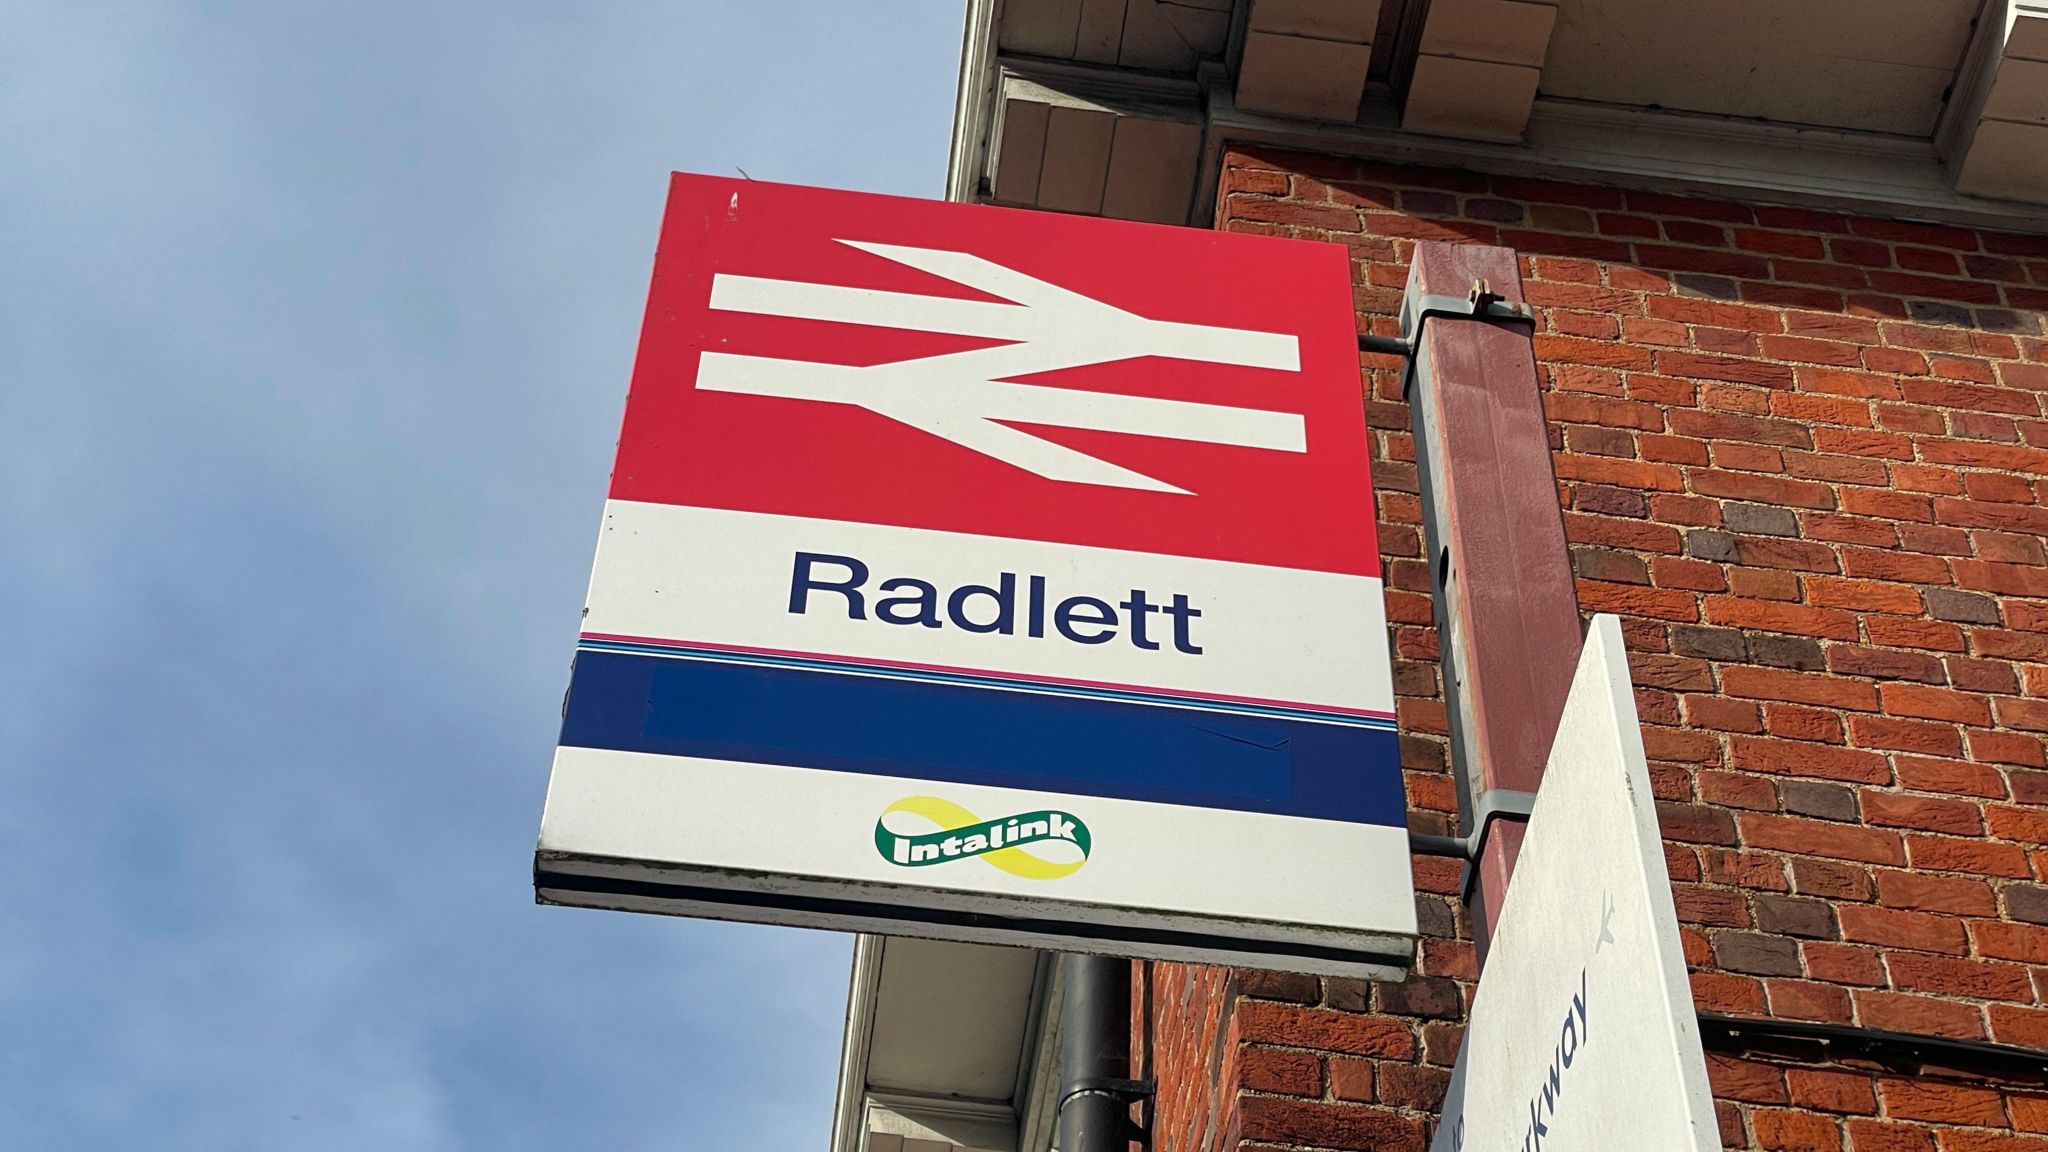 Radlett train station